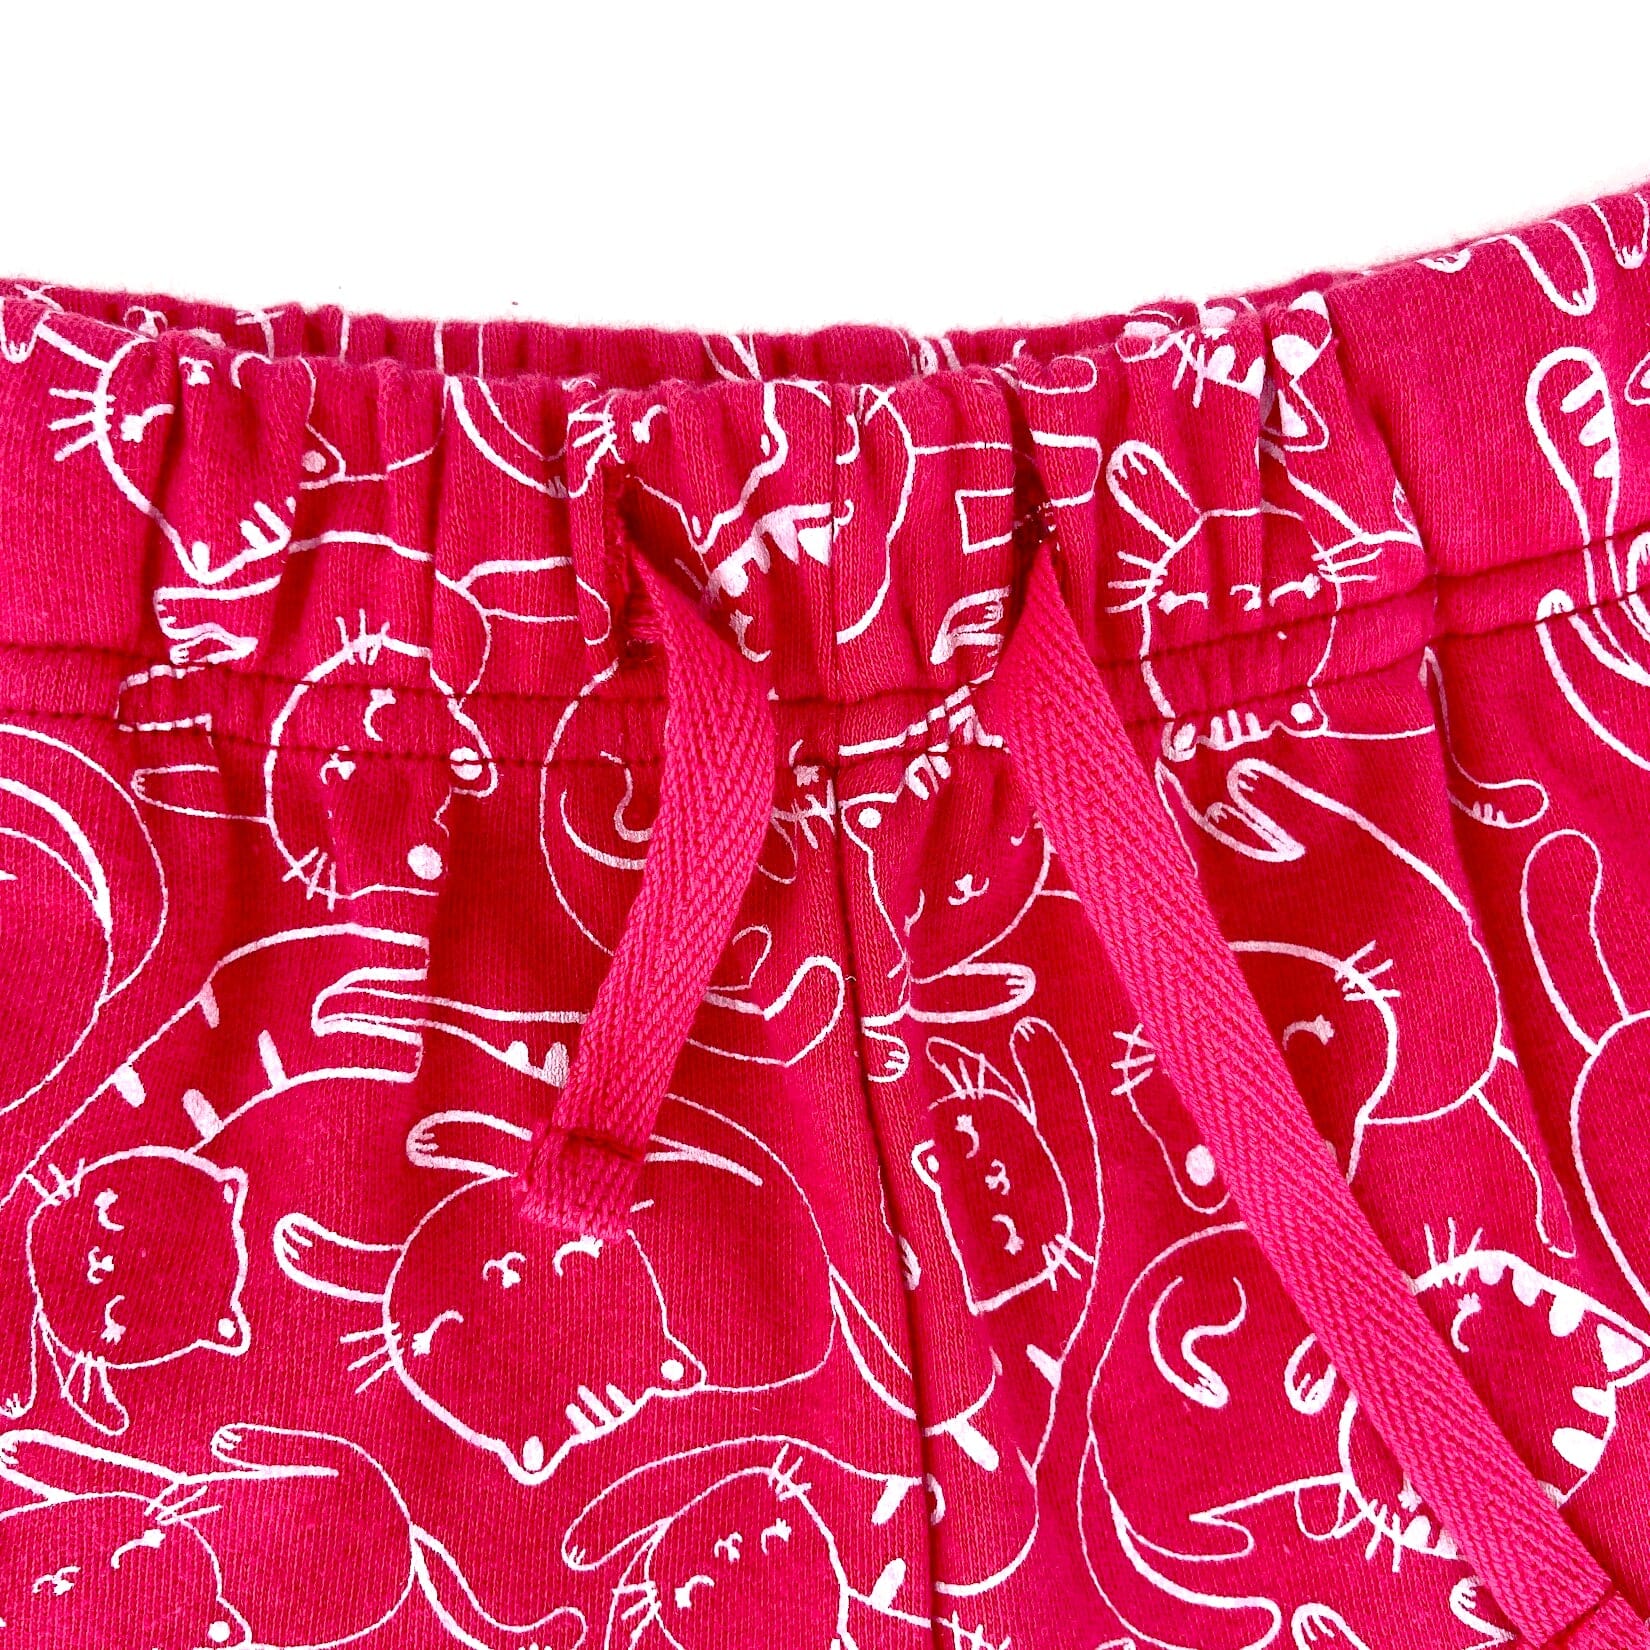 Women's Adorable Sleepy Kitty Cat Patterned Knit PJ Pyjama Shorts